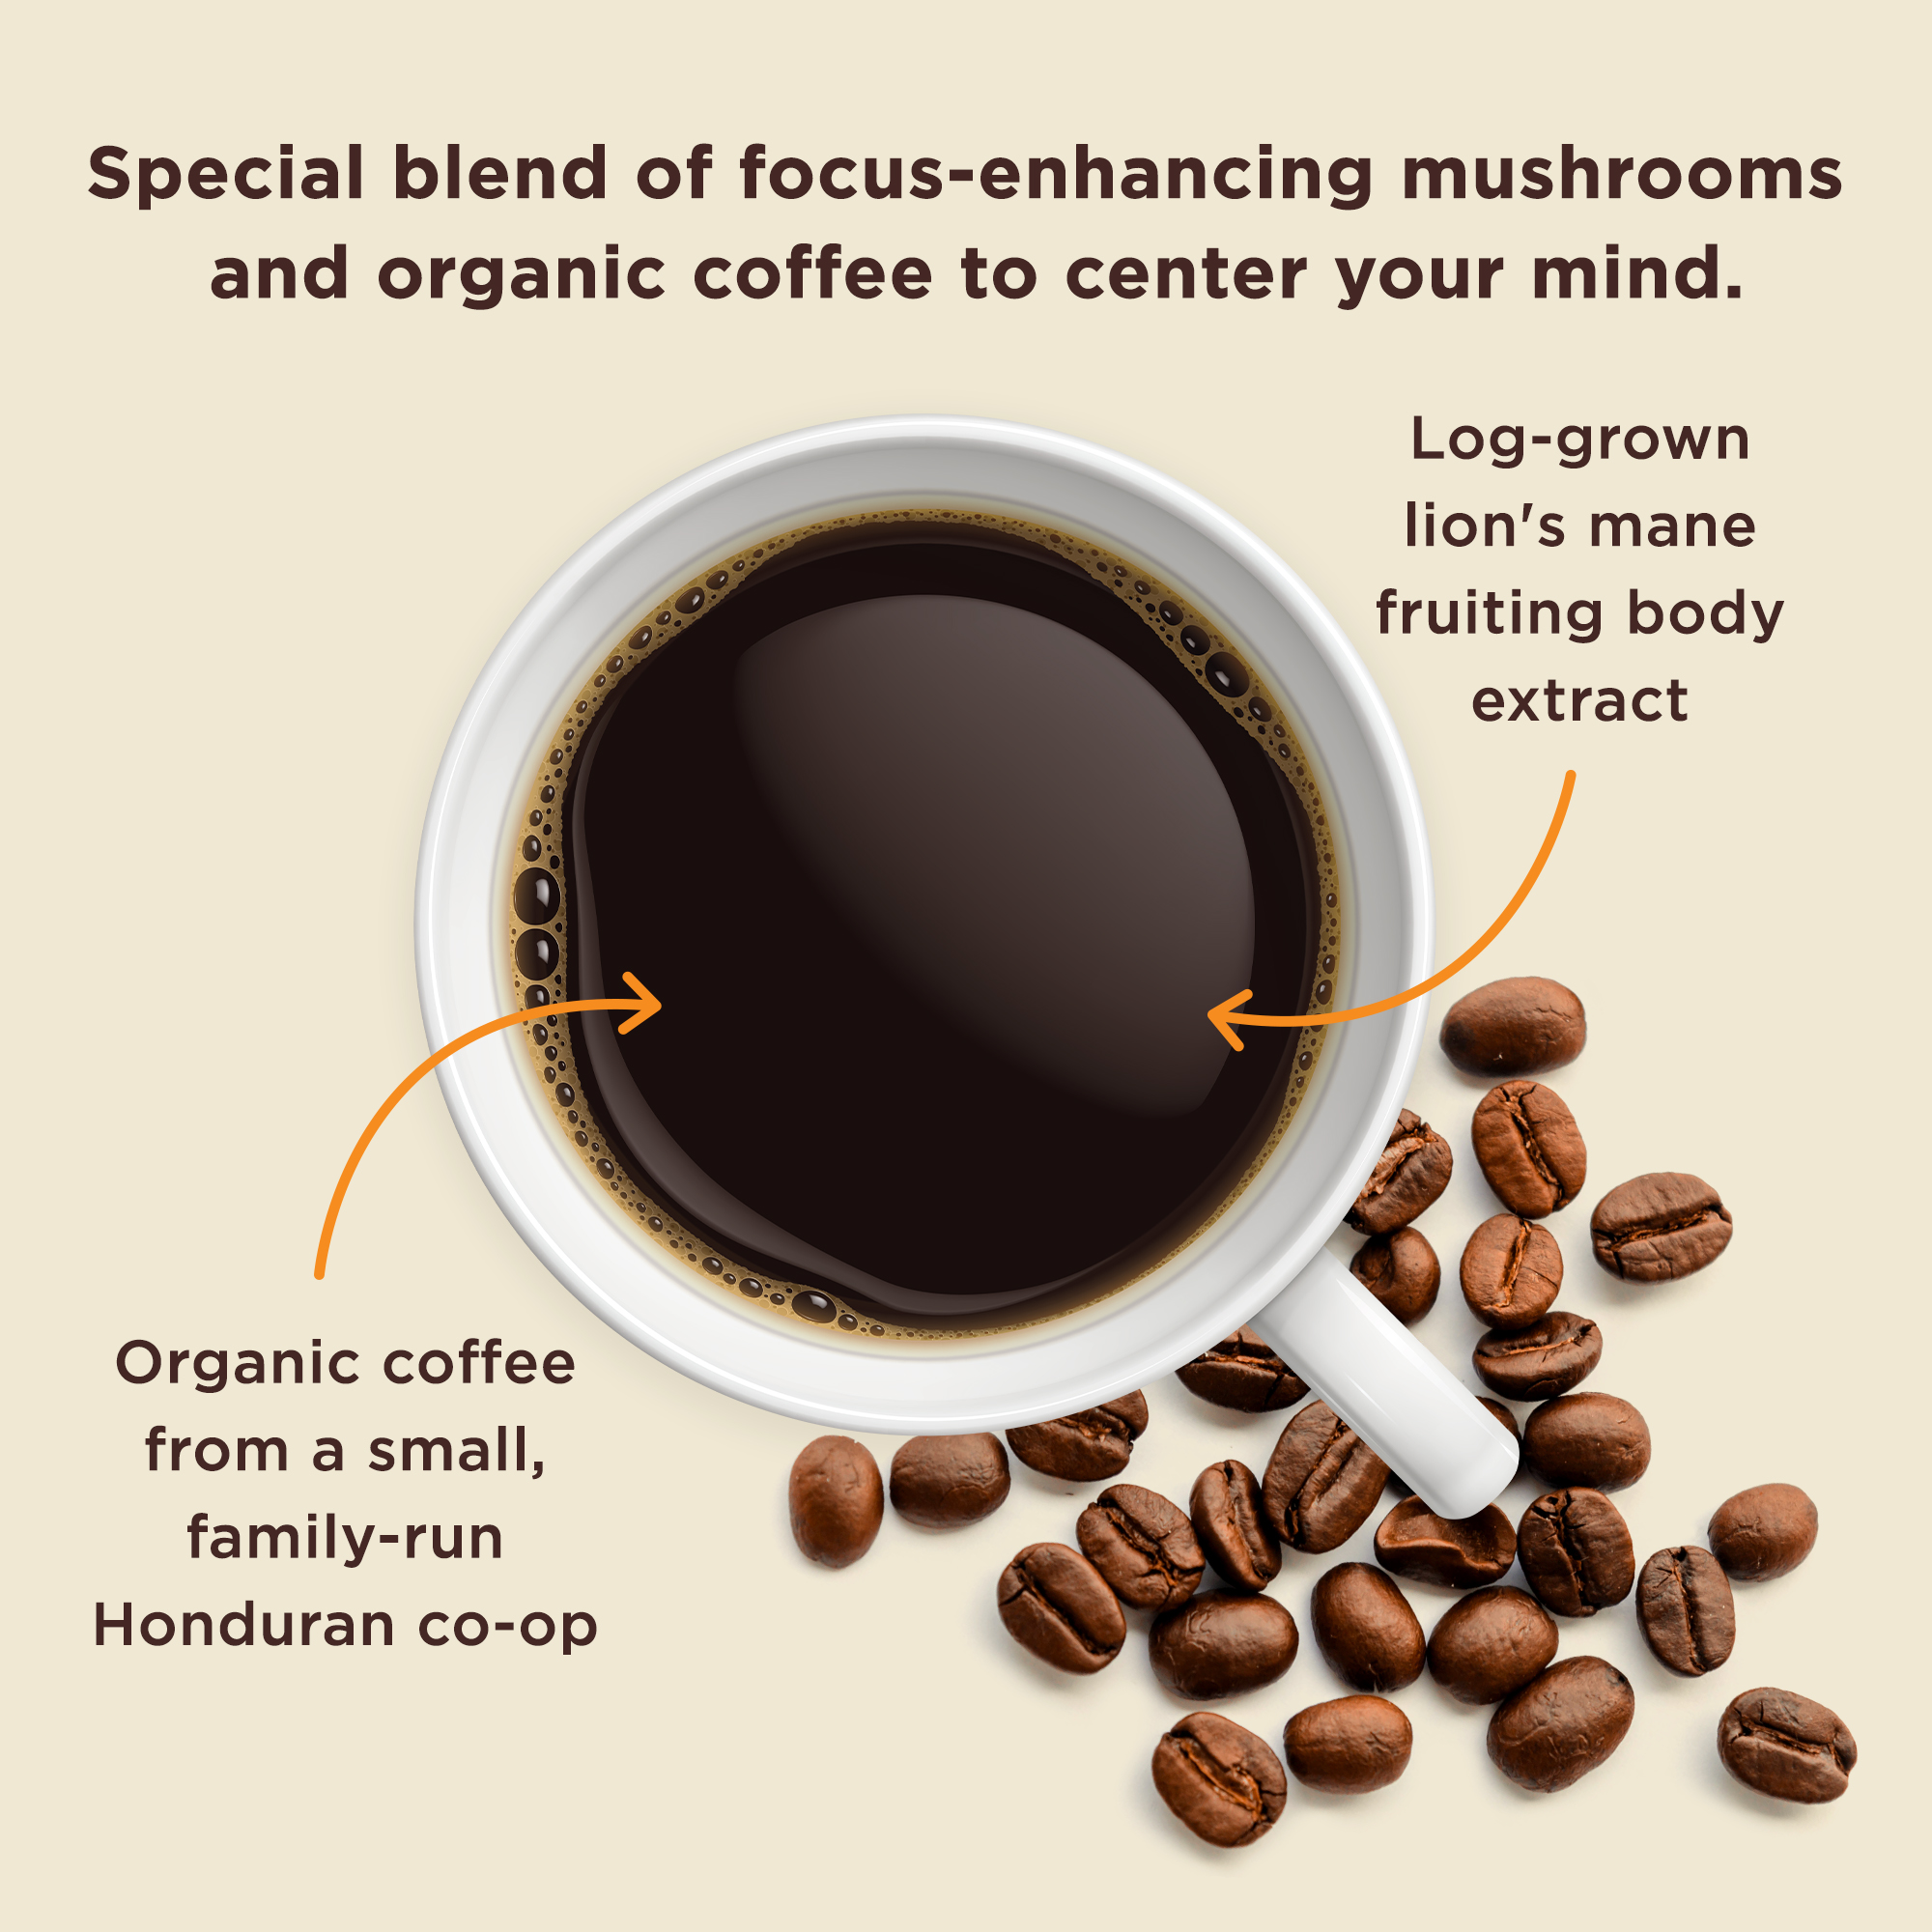 Think Ground Coffee: Lion's Mane Mushroom Blend - Four Sigmatic